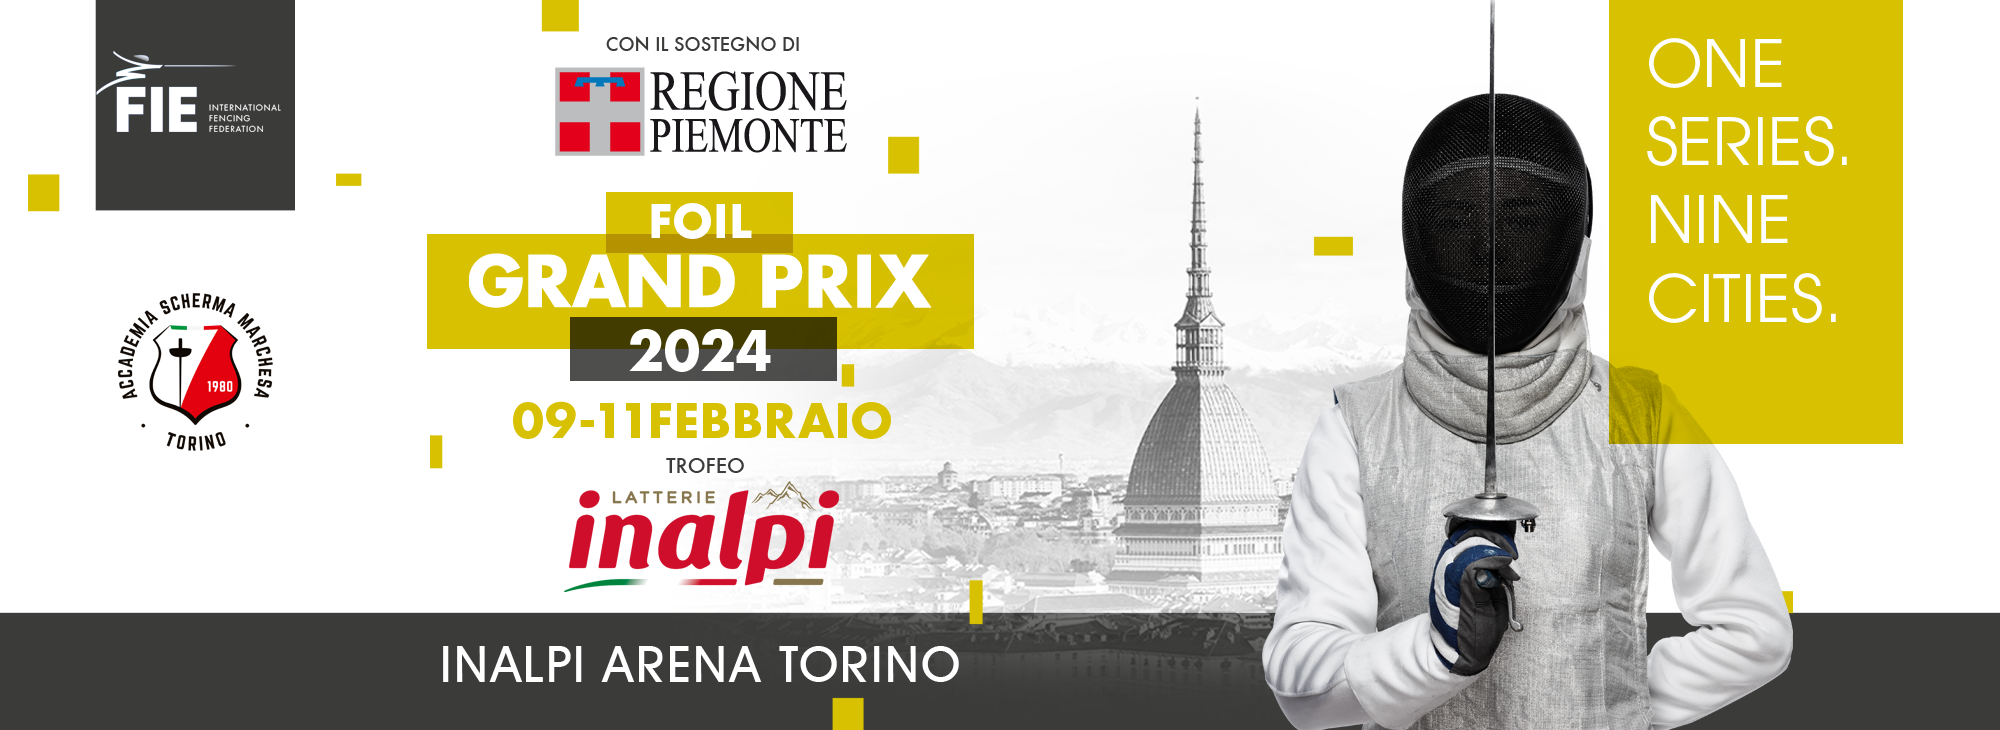 Fencing Grand Prix Torino Grand Prix